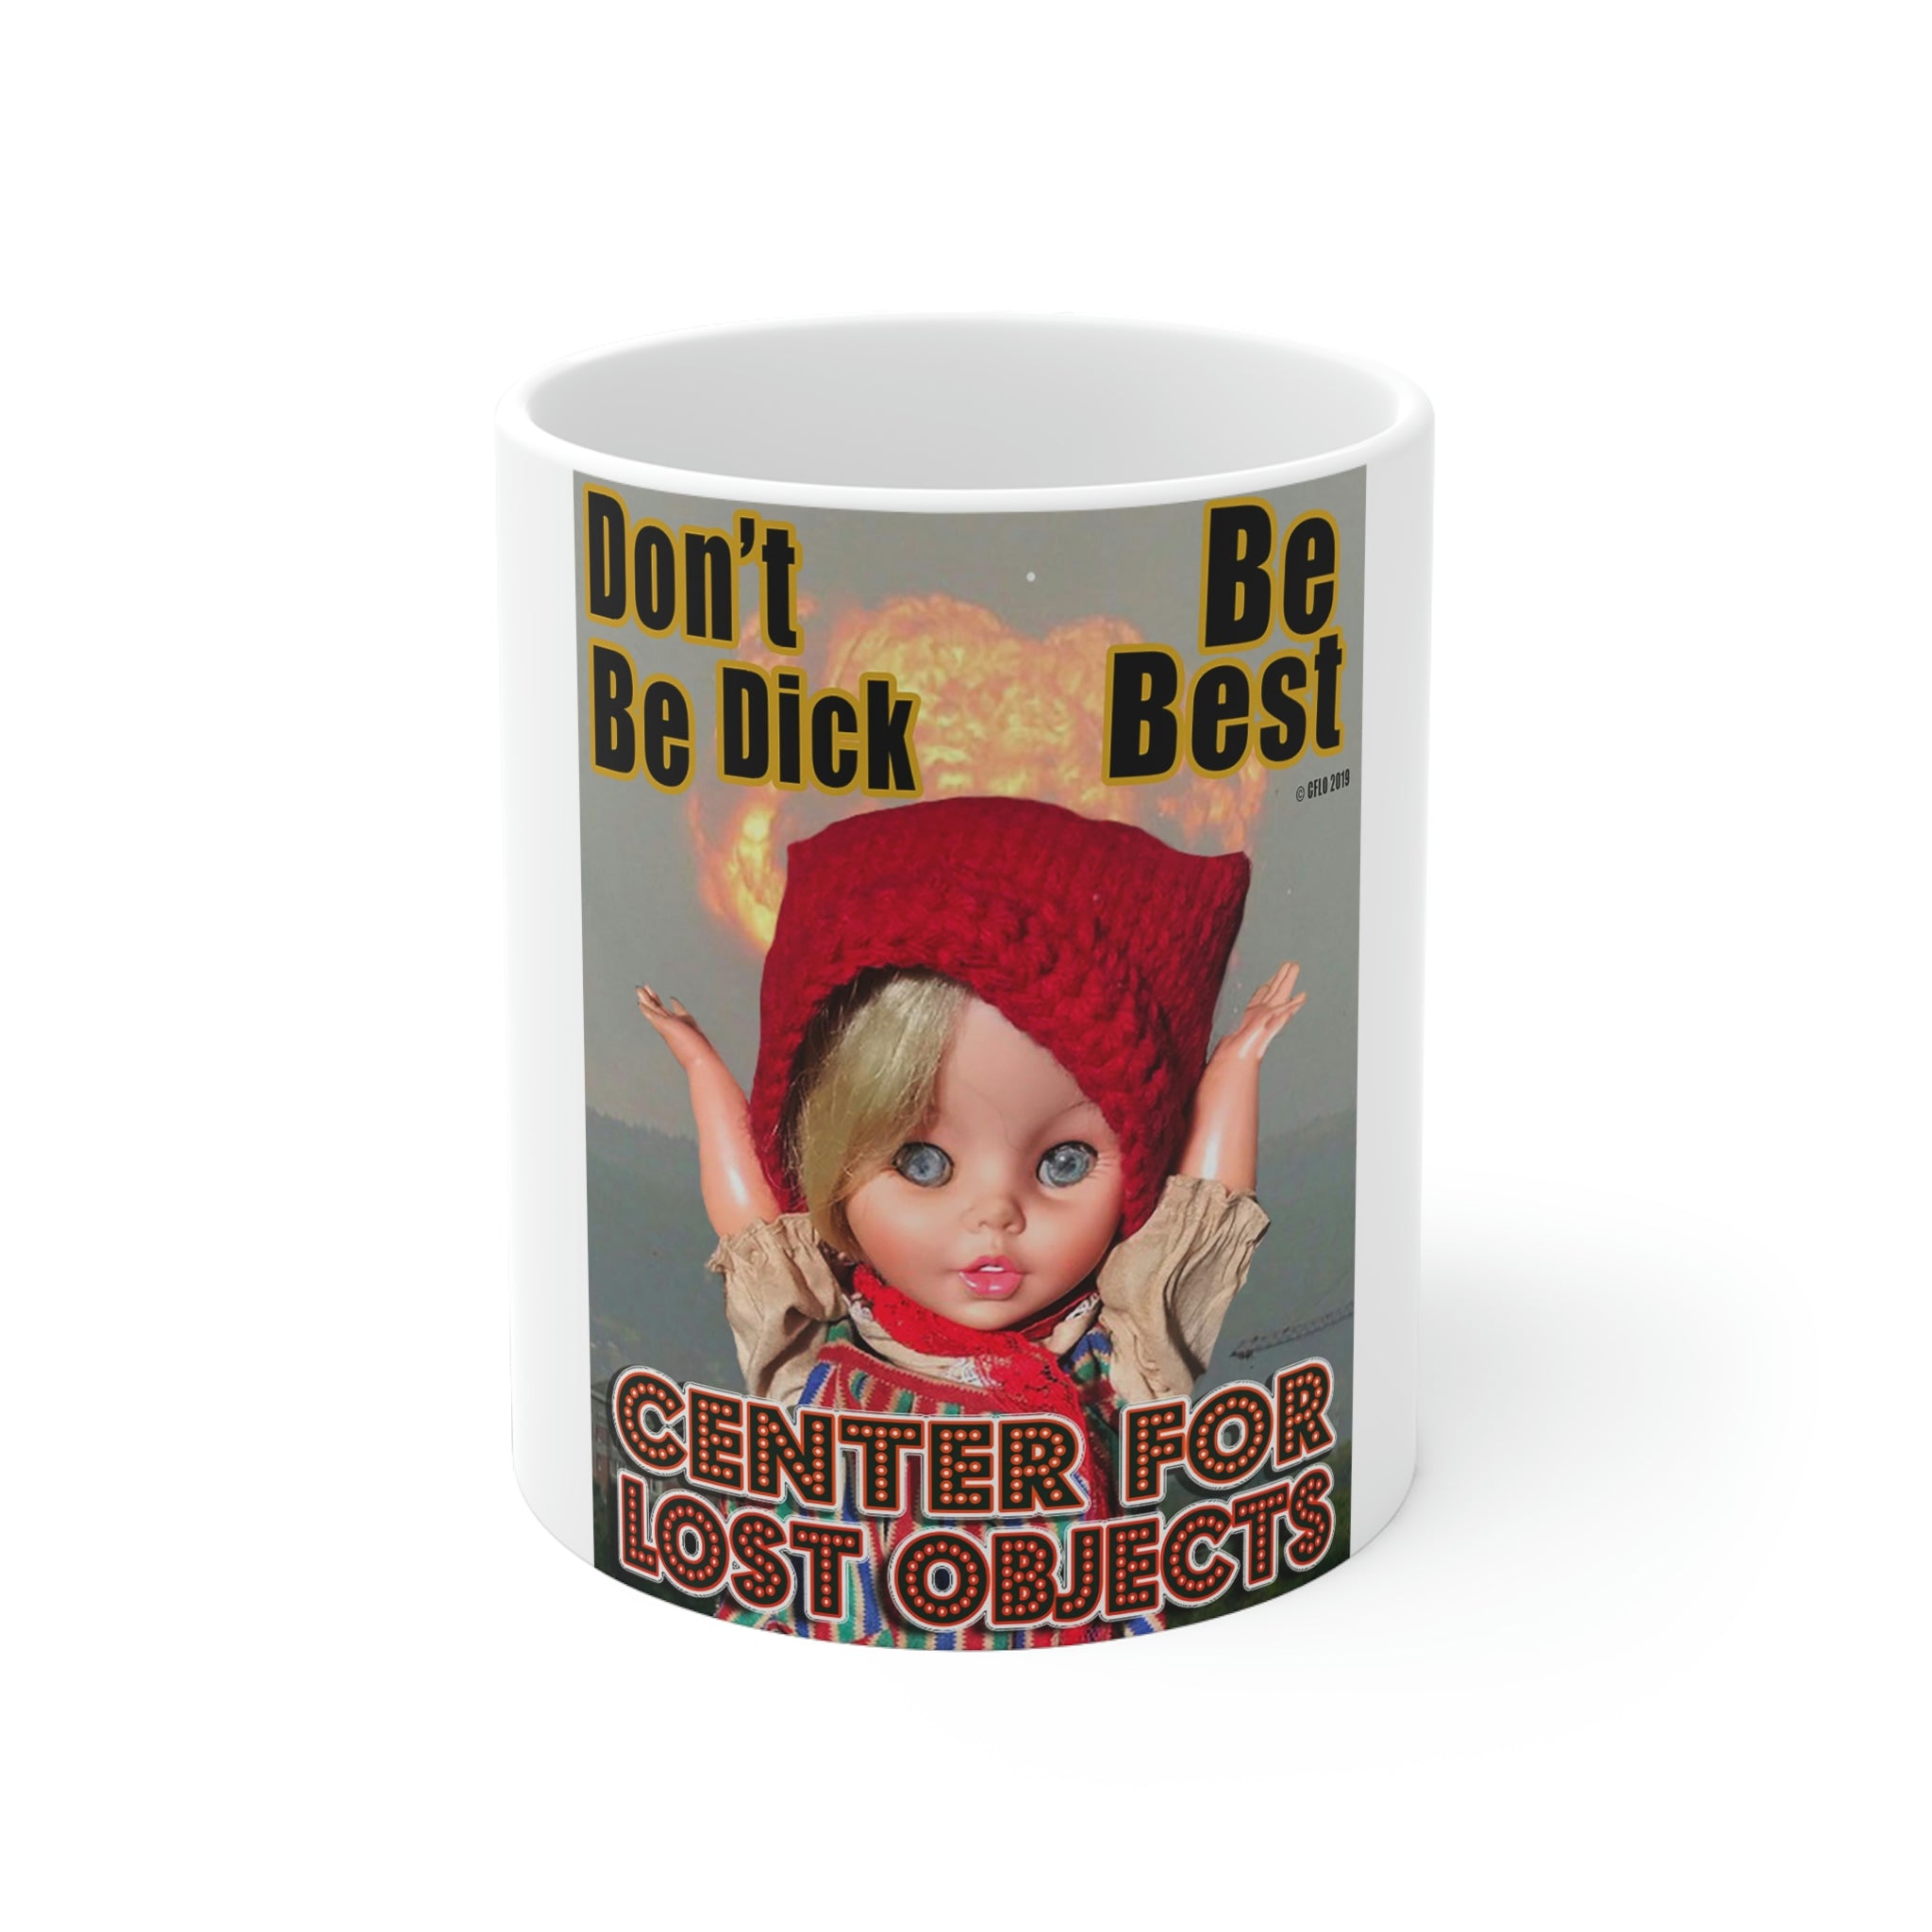 CFLO "Don't Be Dick  Be Best" Mug